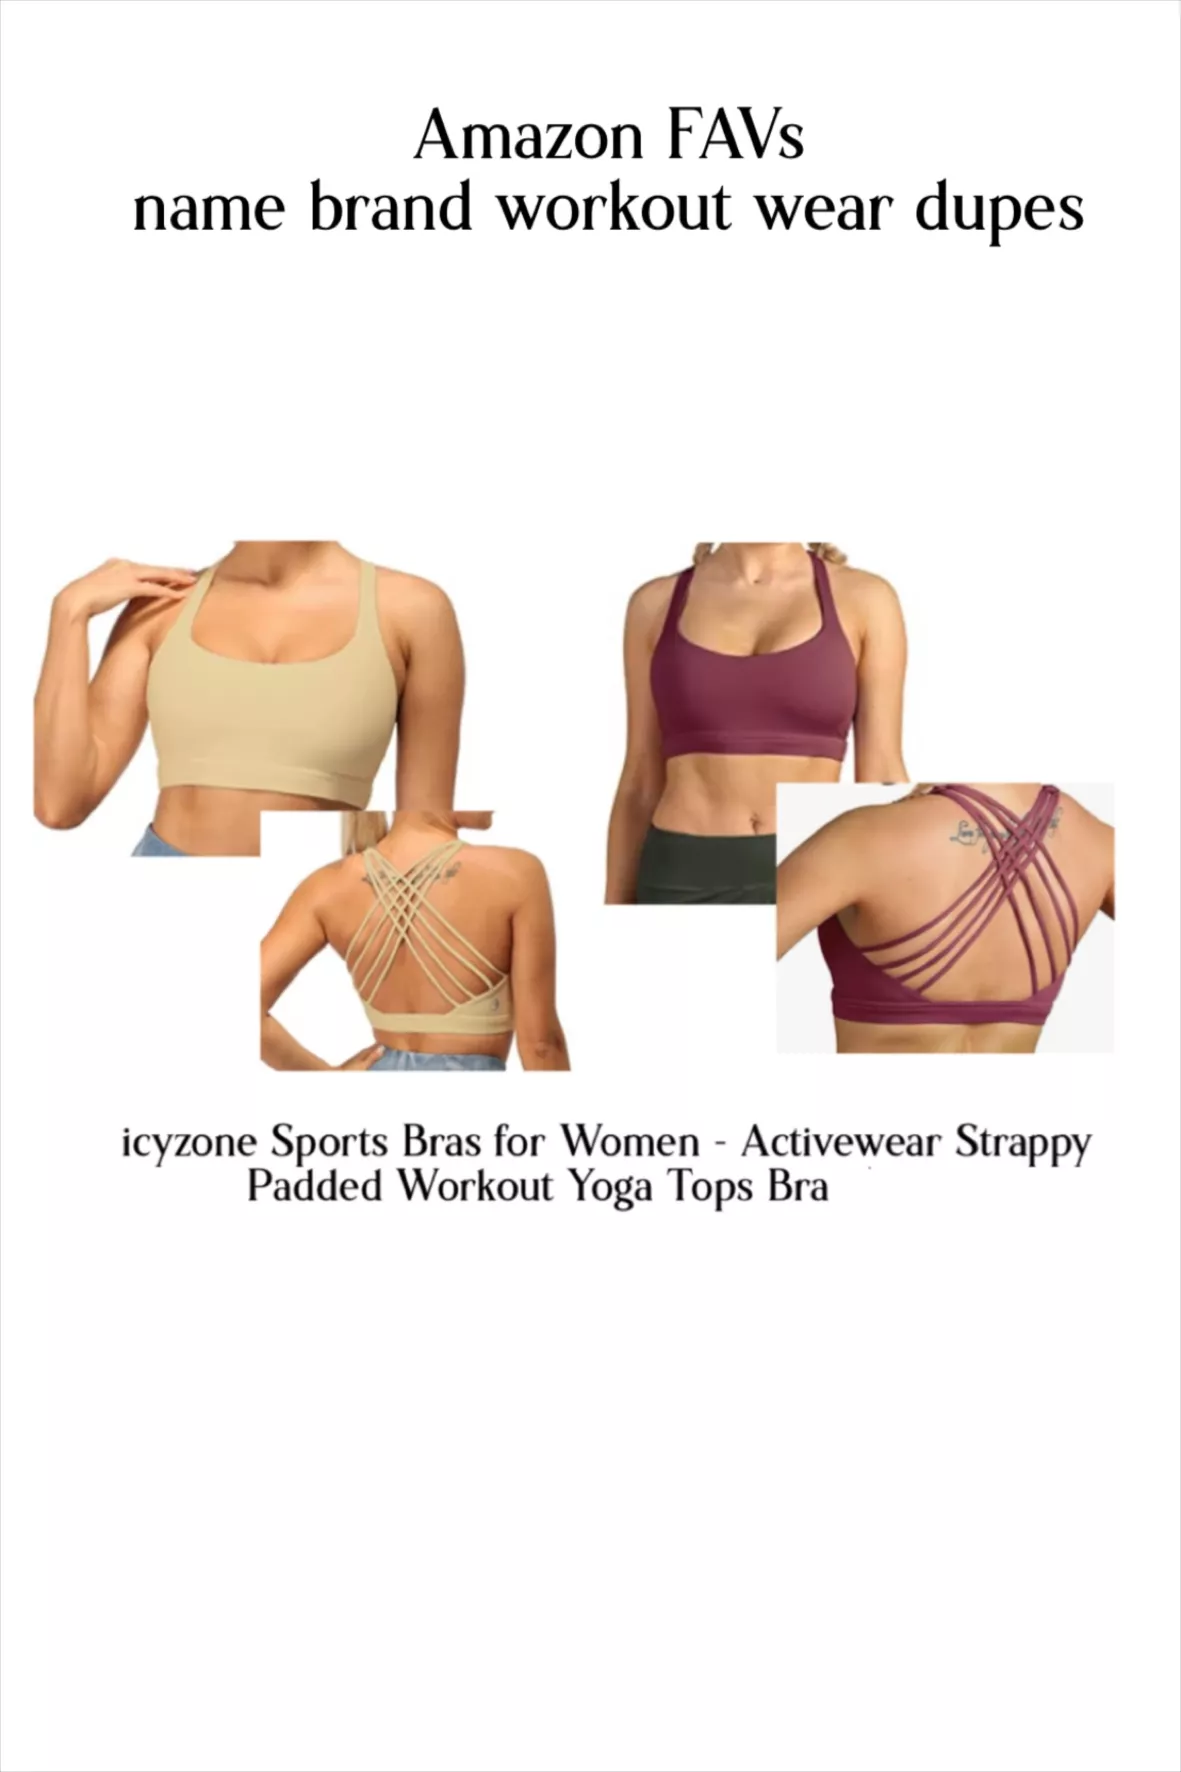 Mipaws High Waist Yoga Pants 7/8 Length Tummy Control Workout Seamless  Waistband